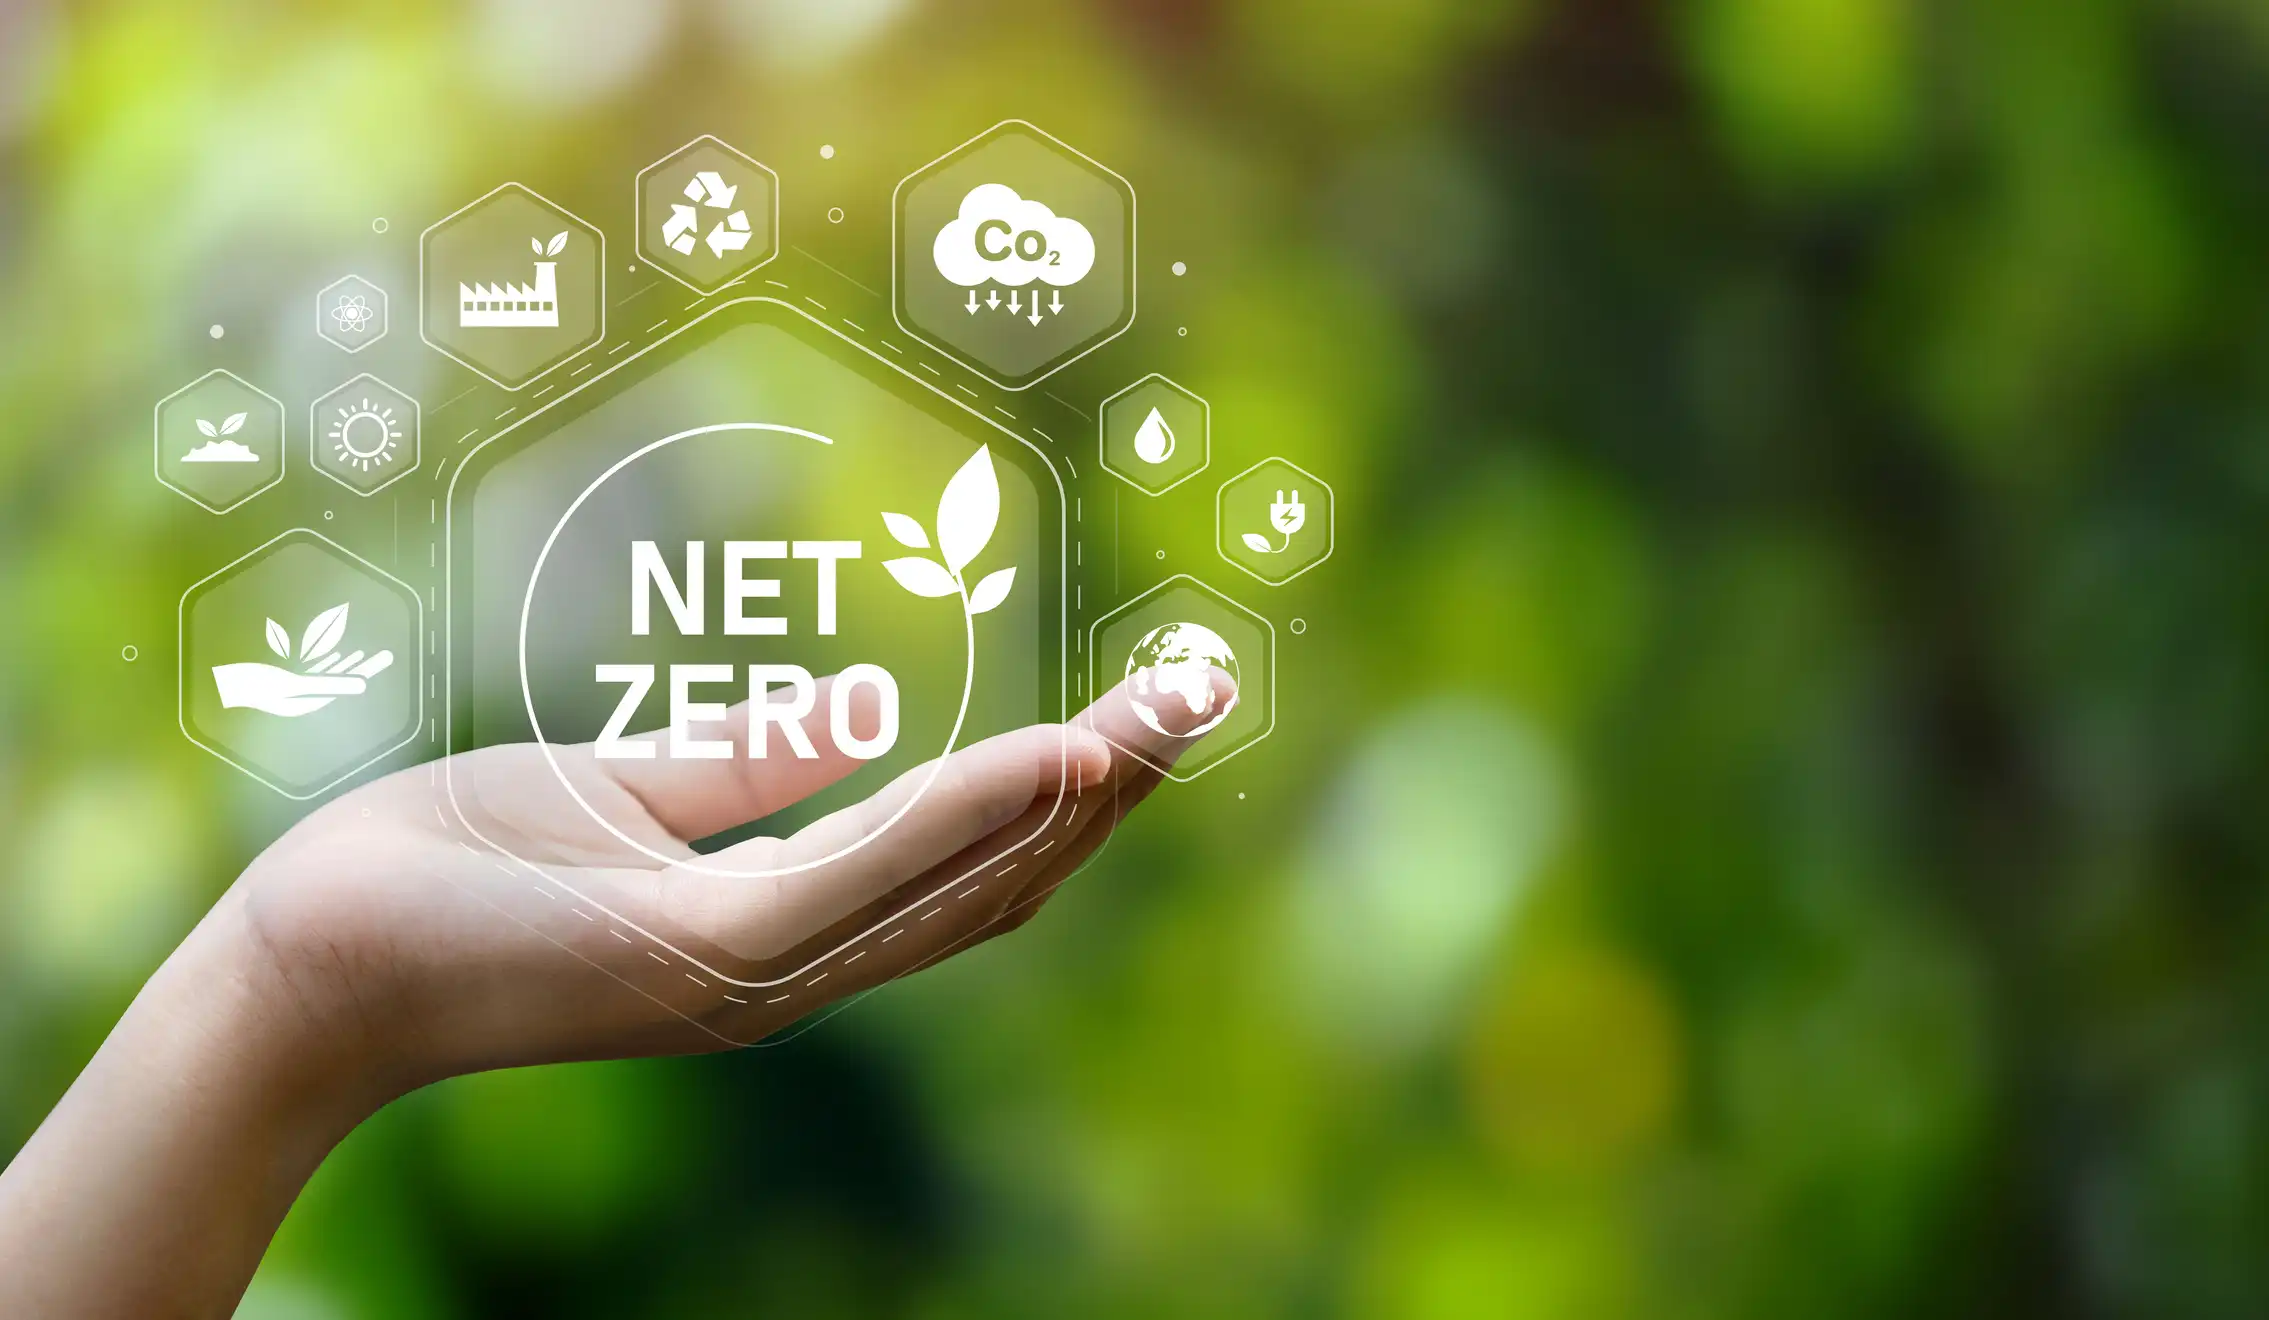 The Net Zero Seminar Programme